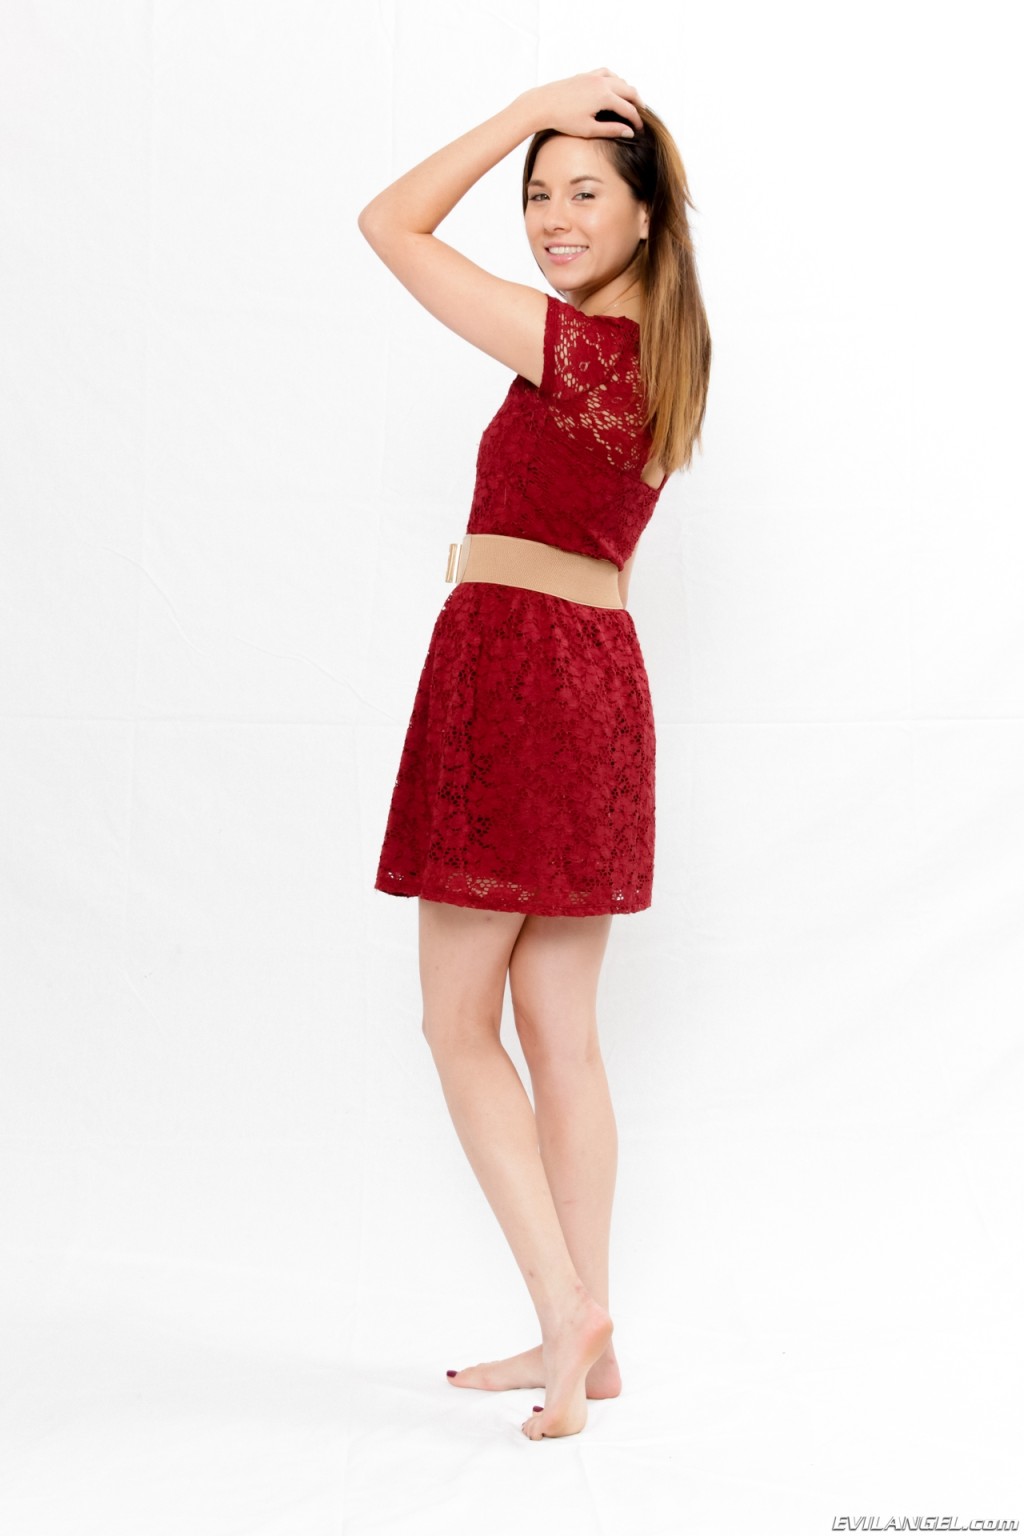 Shyla jennings in vestito rosso
 #76437982